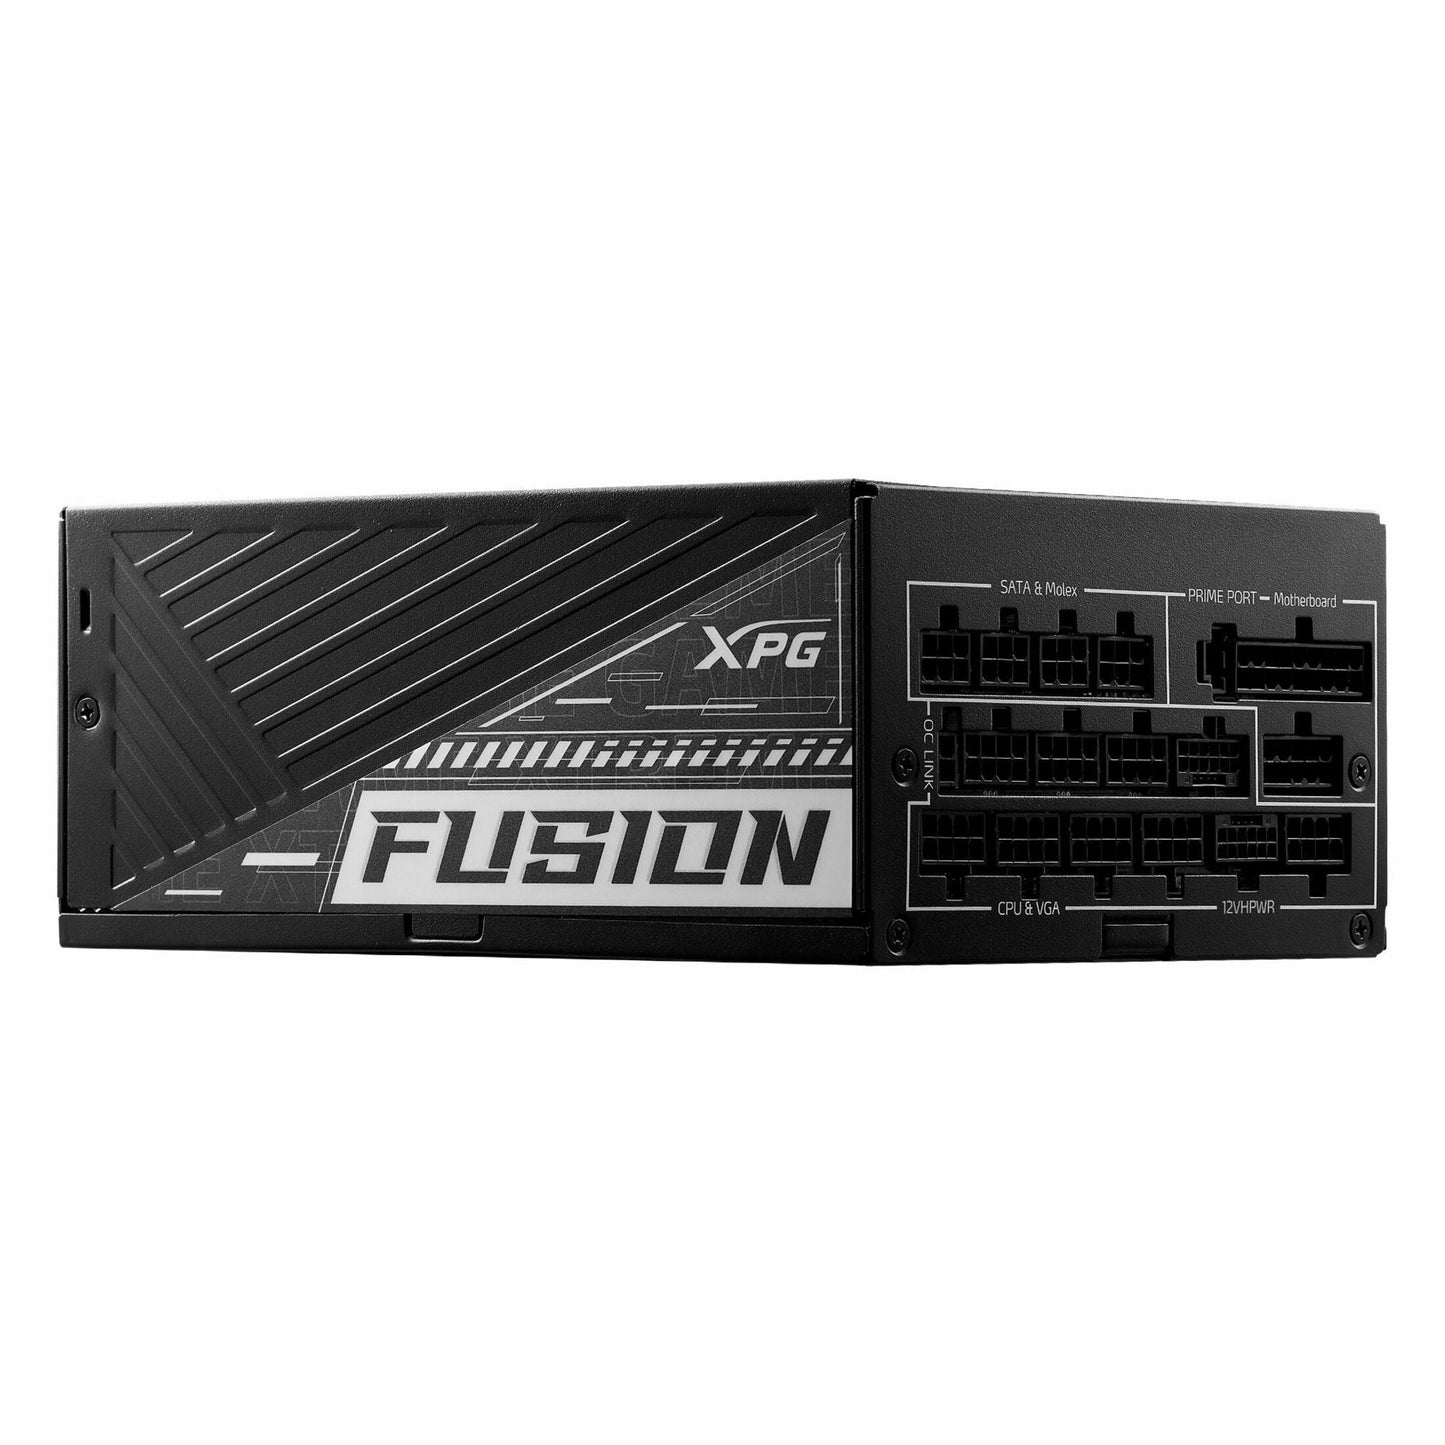 XPG Fusion 1600 Titanium Power Supply